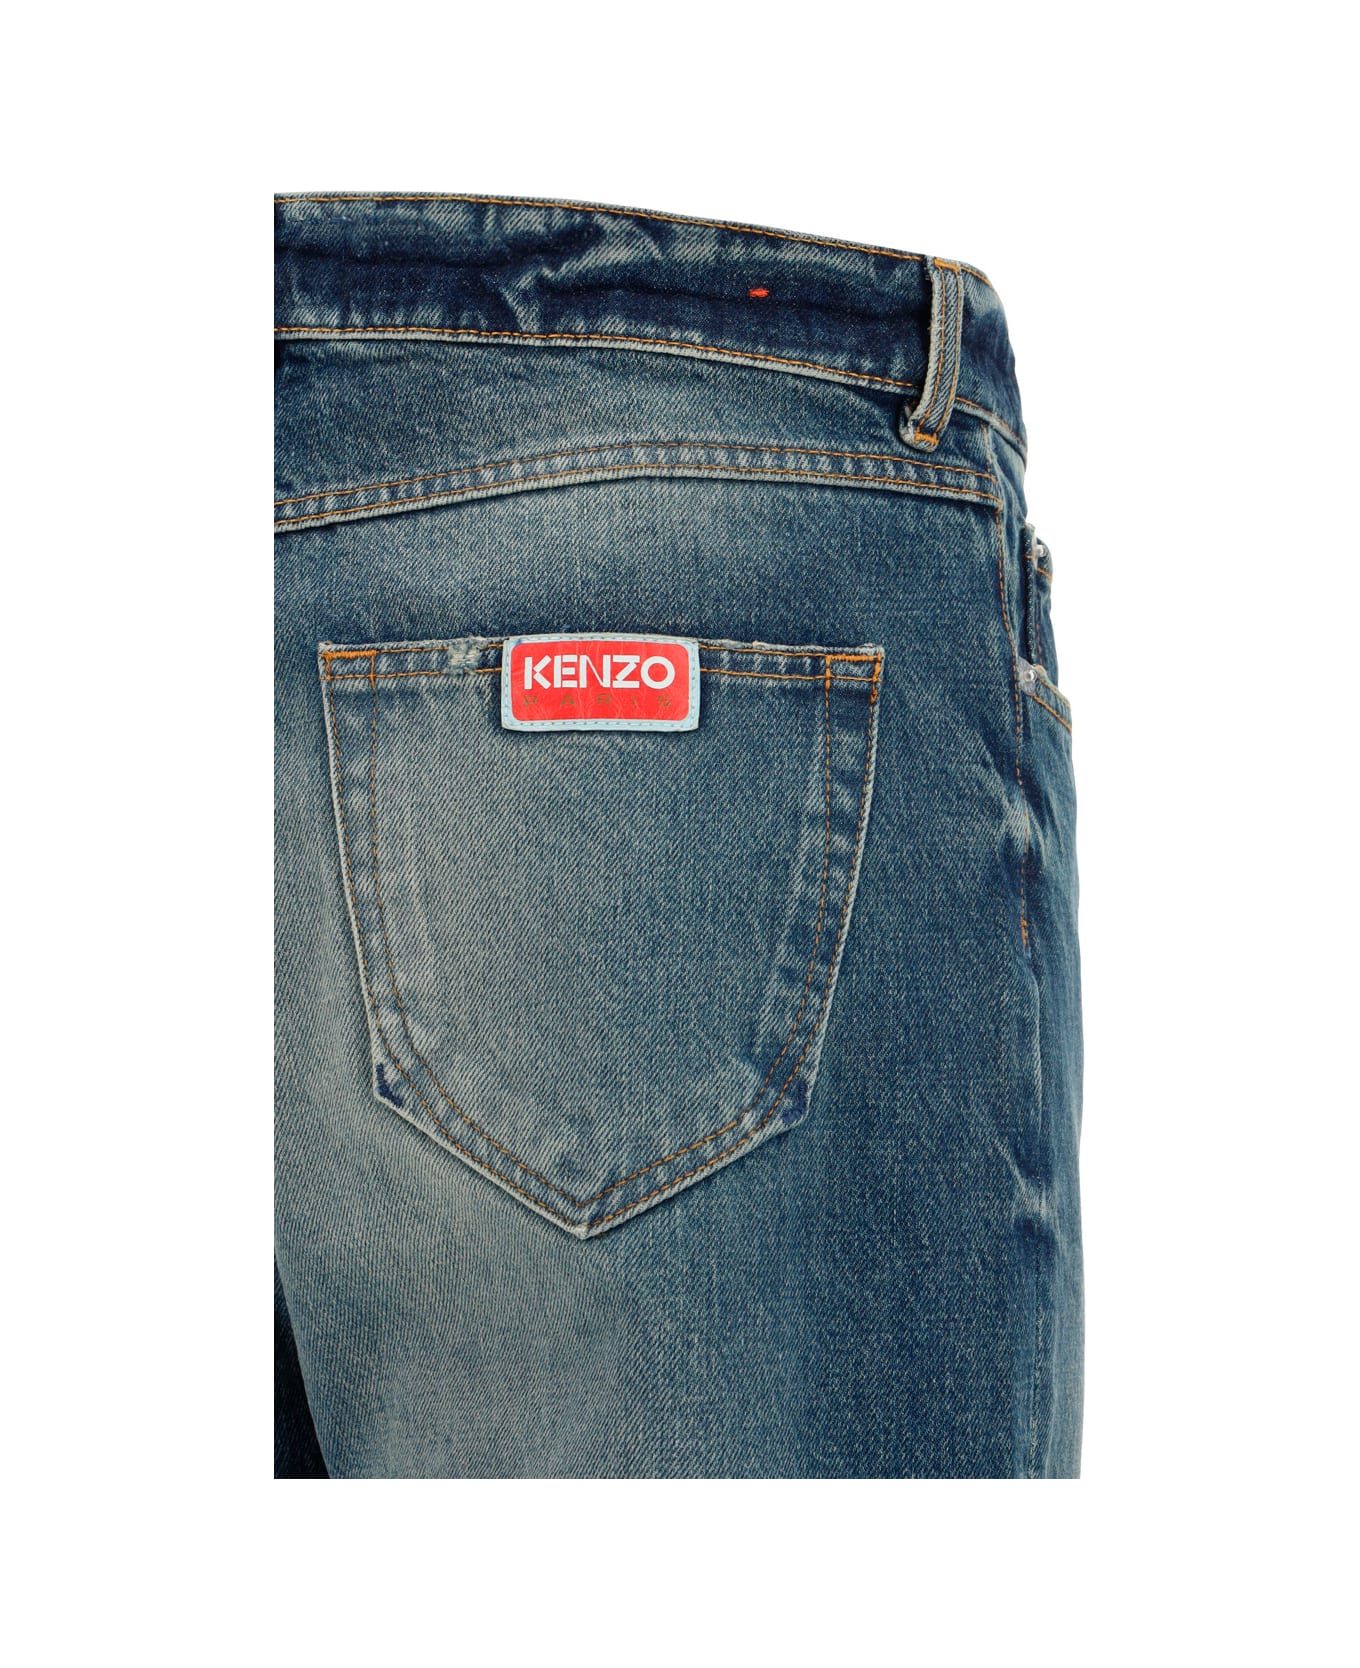 Kenzo 5-pocket Straight Jeans - Medium Stone Bl デニム